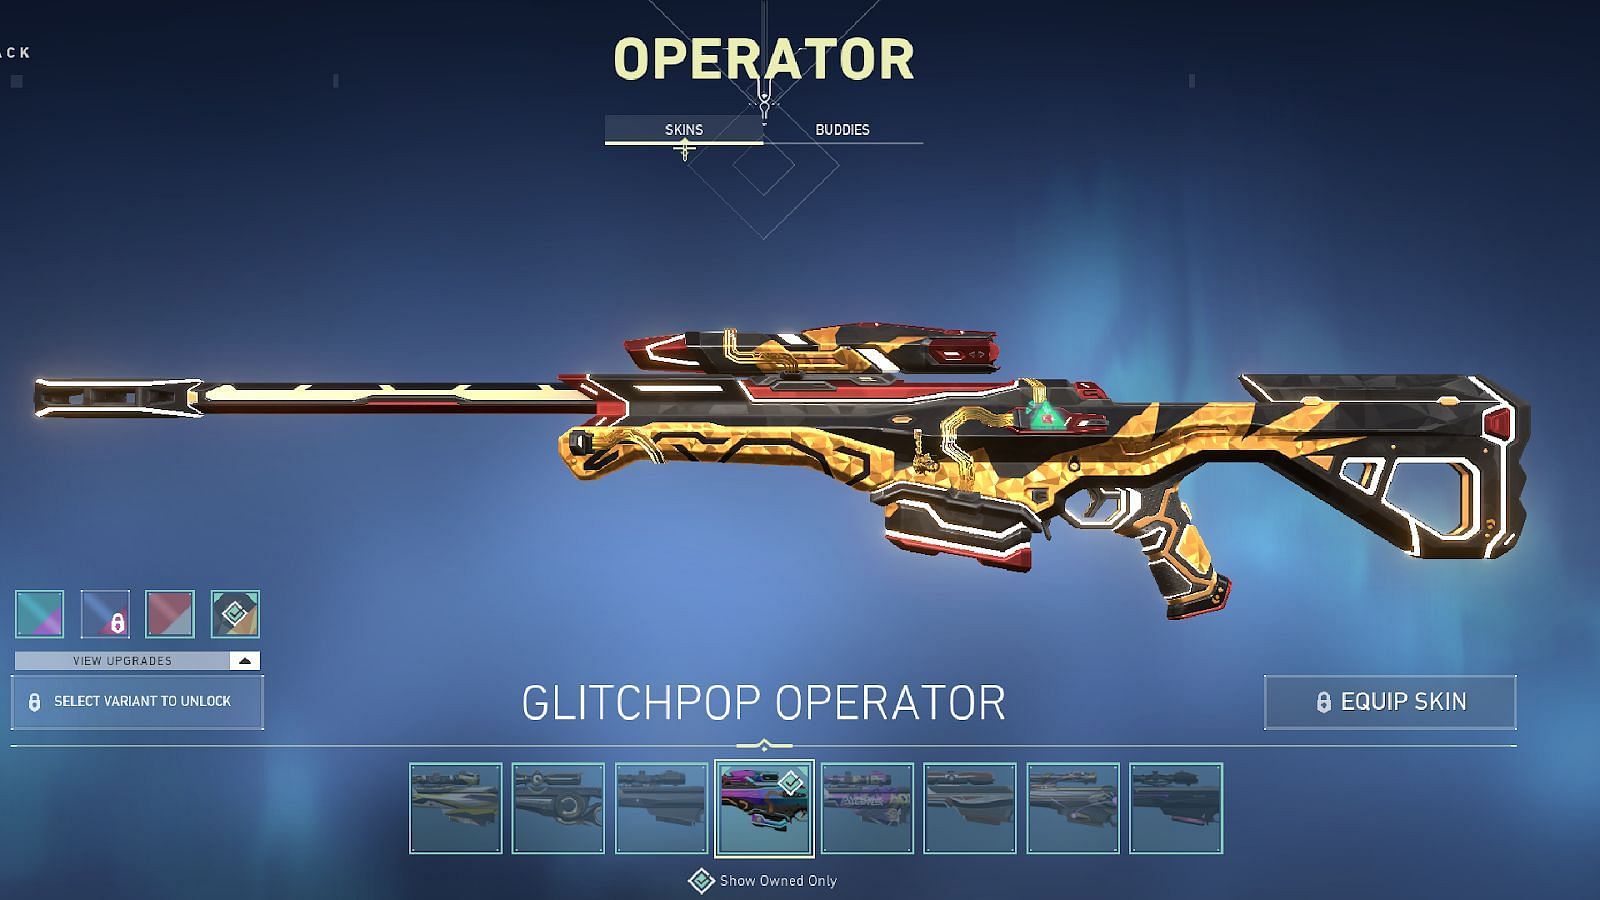 Glitchpop Operator (Image via Riot Games)